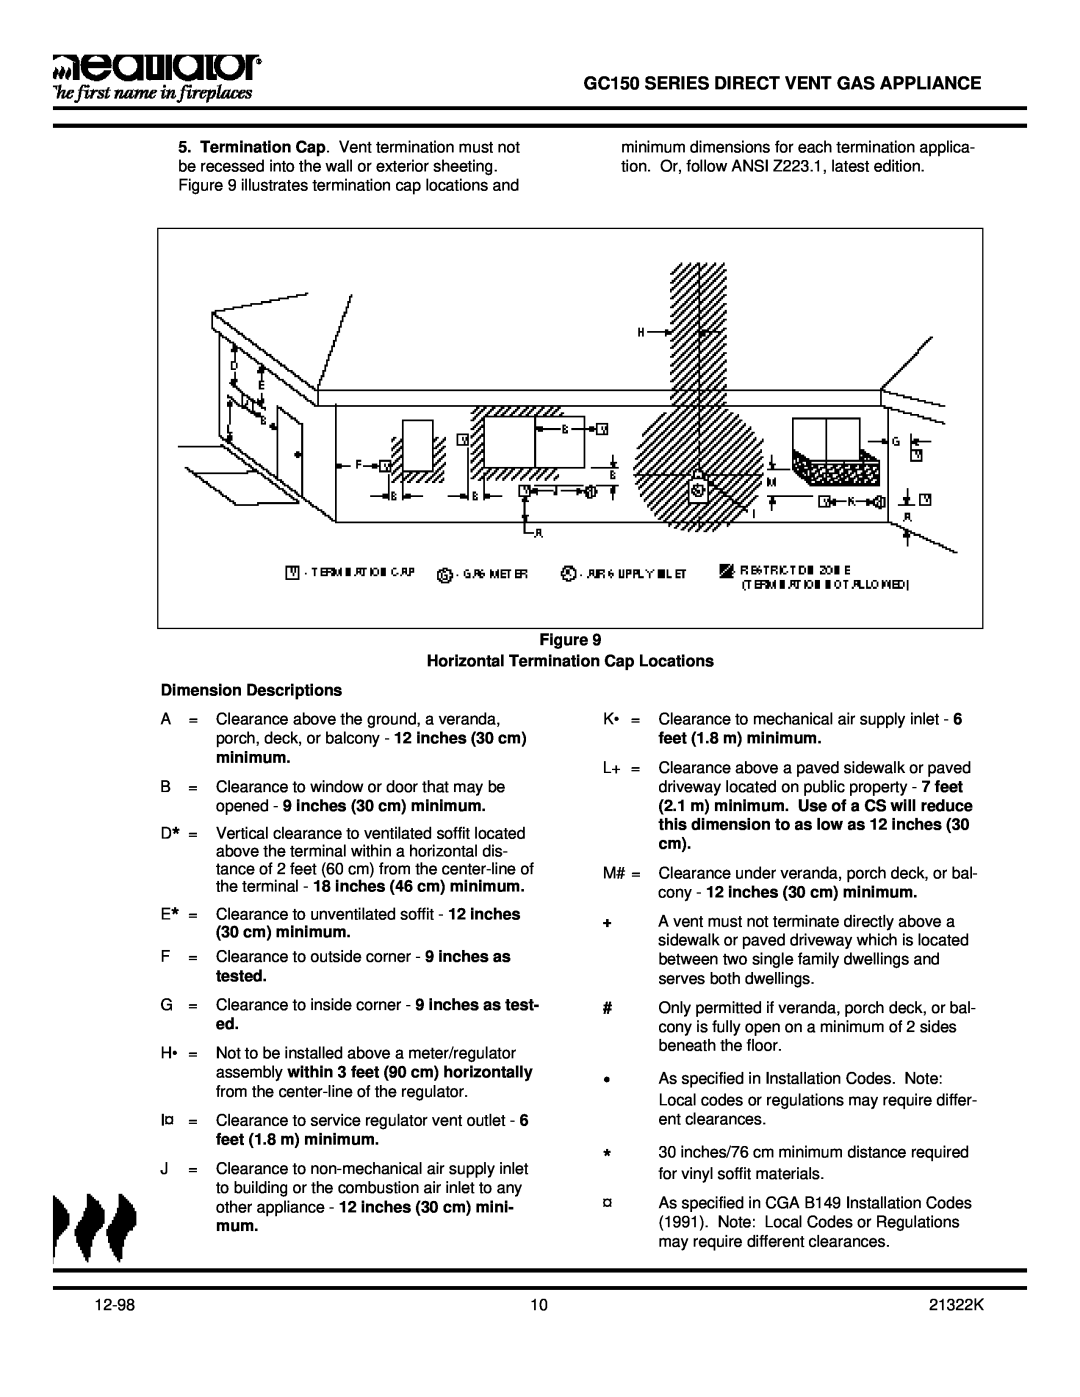 Heatiator GC150 SERIES DIRECT VENT GAS APPLIANCE, Figure Horizontal Termination Cap Locations, Dimension Descriptions 